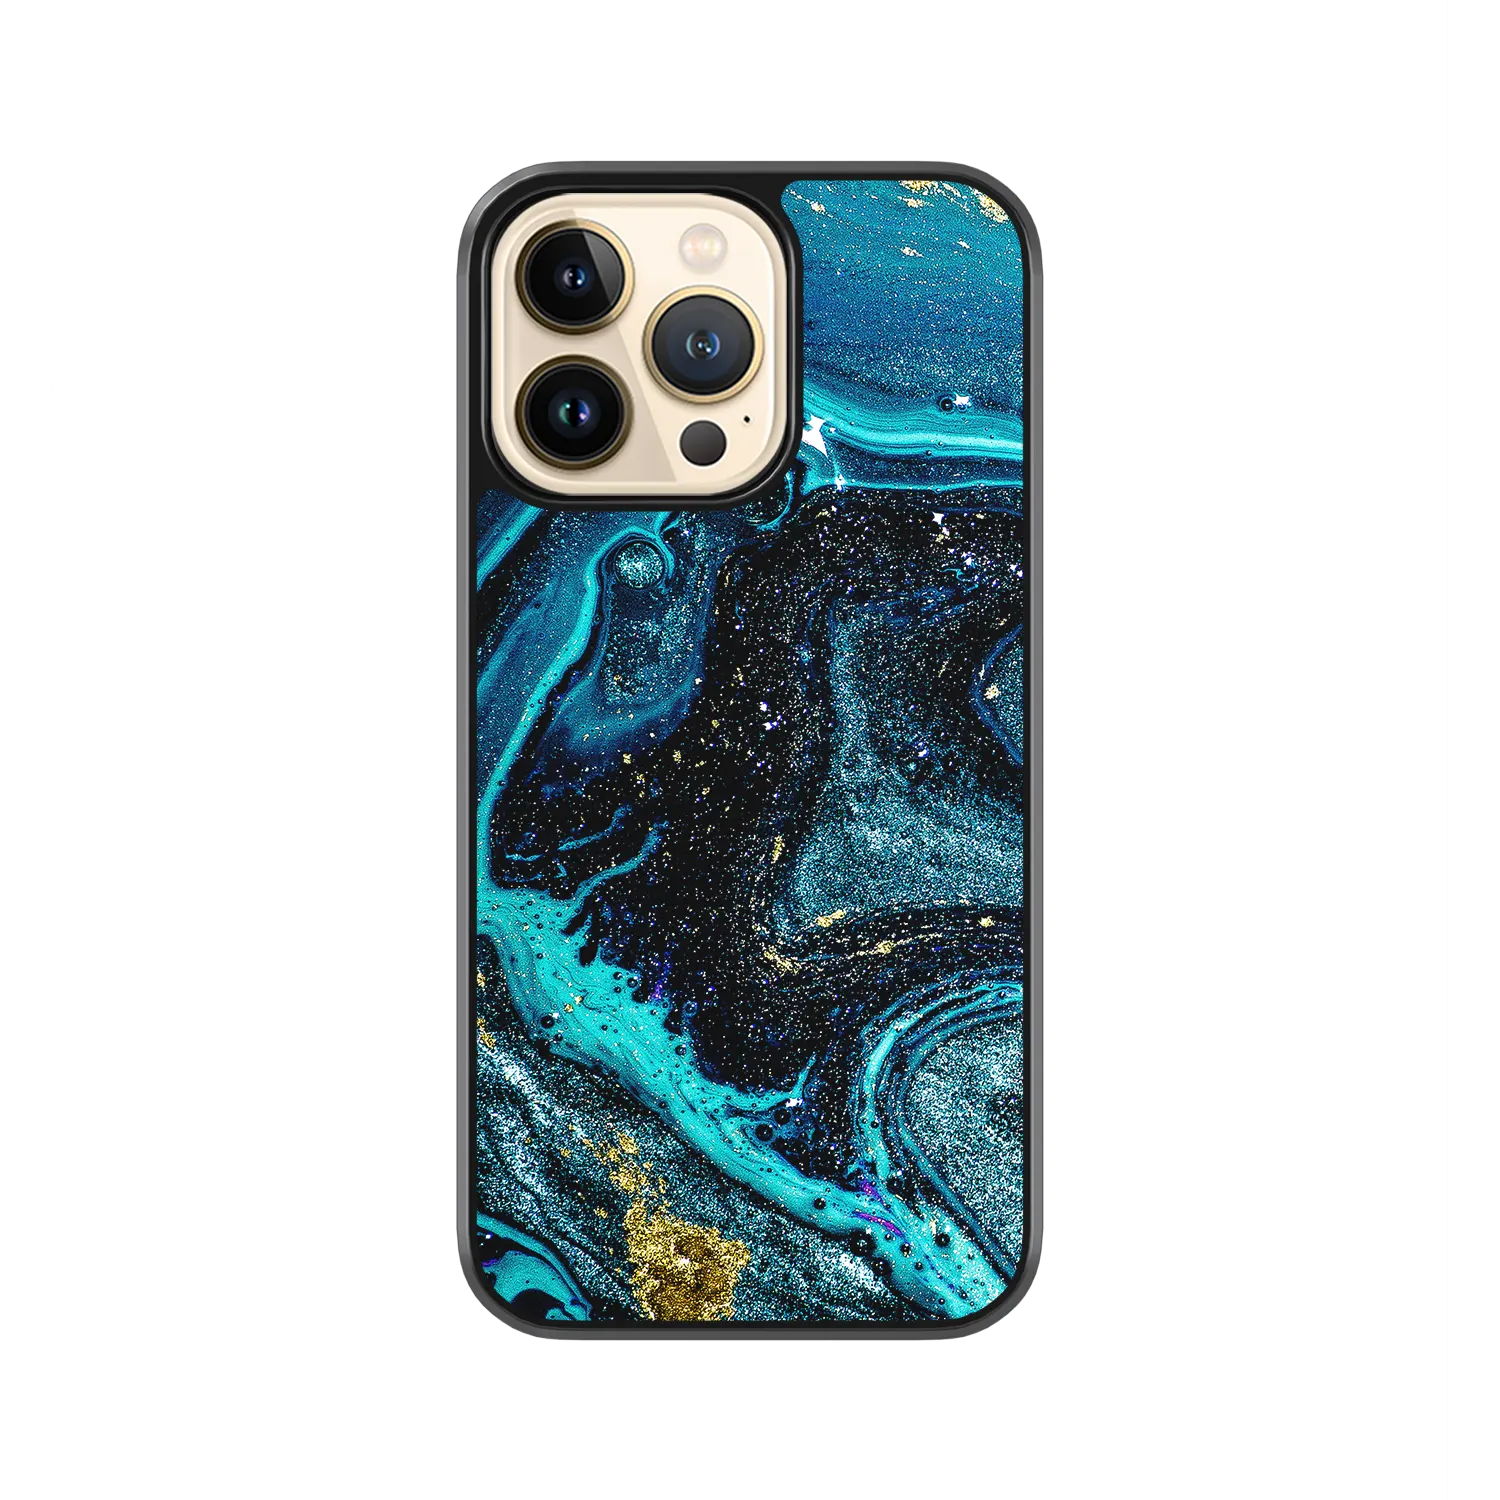 Poseidon iphone 11 pro max cover